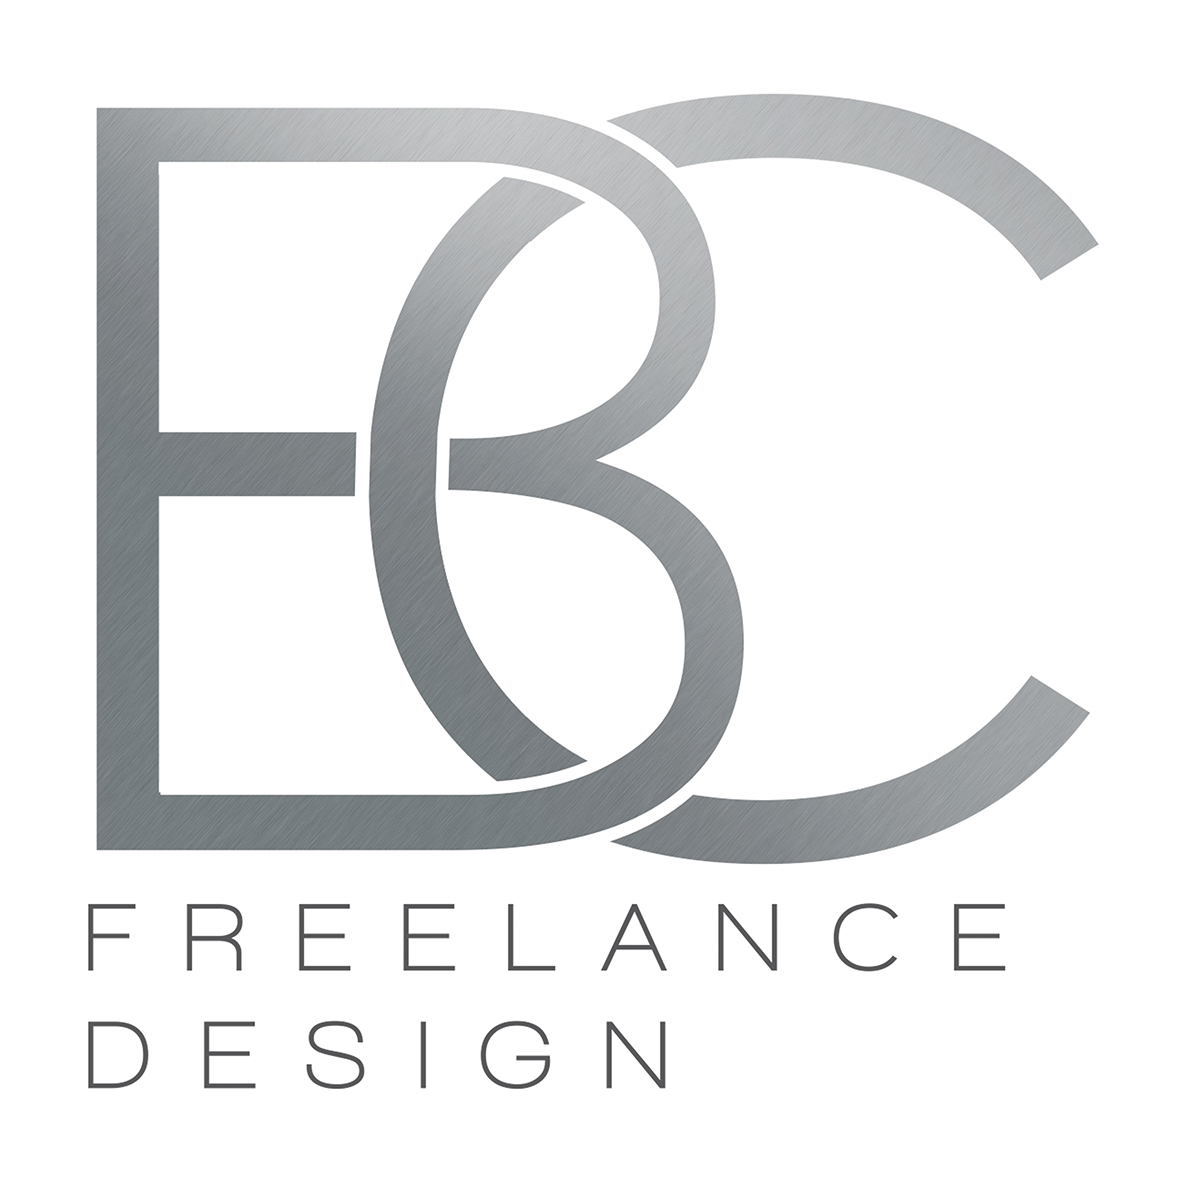 BC freelance design - Accommodation in Brisbane